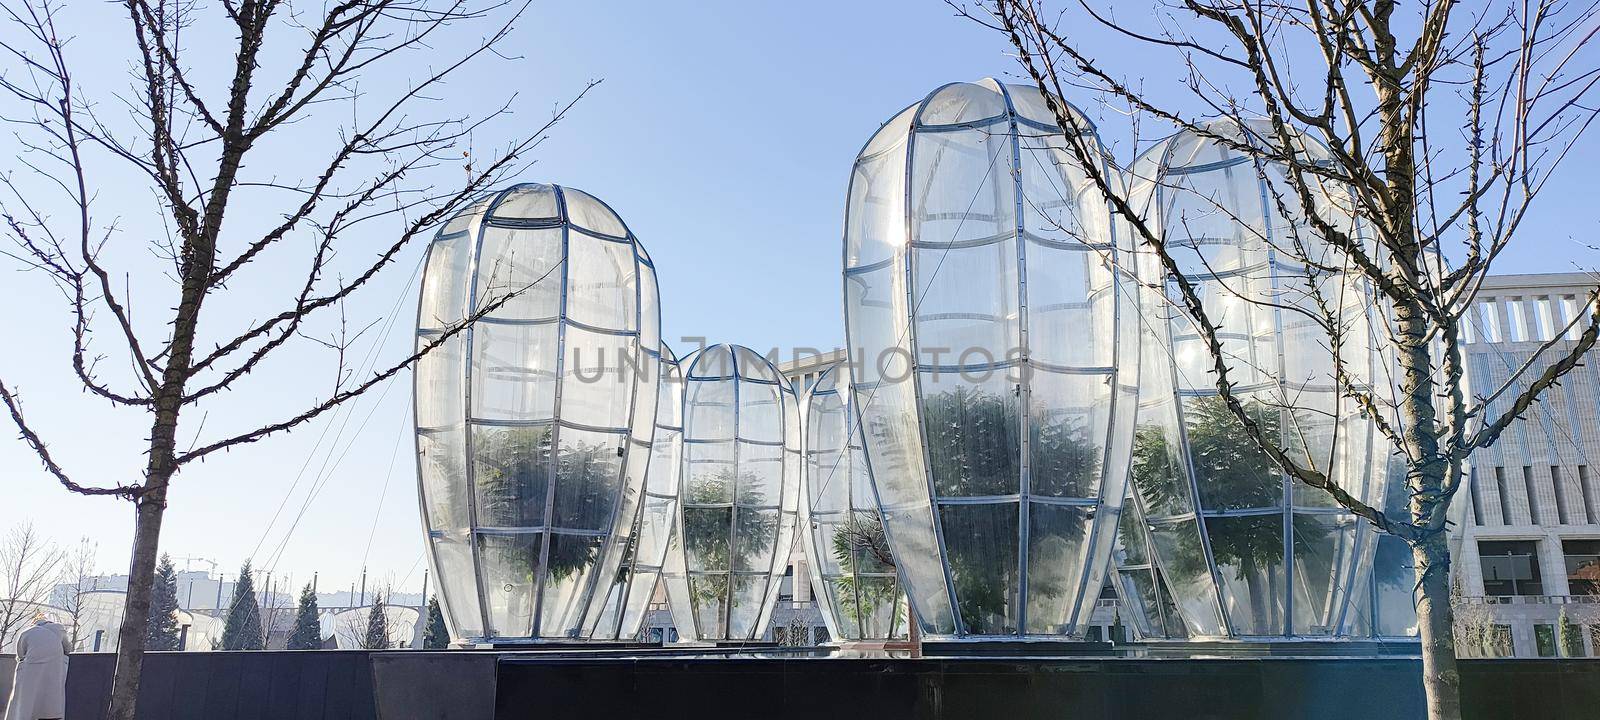 plastic greenhouse for pablic park trees, for winter season by Desperada